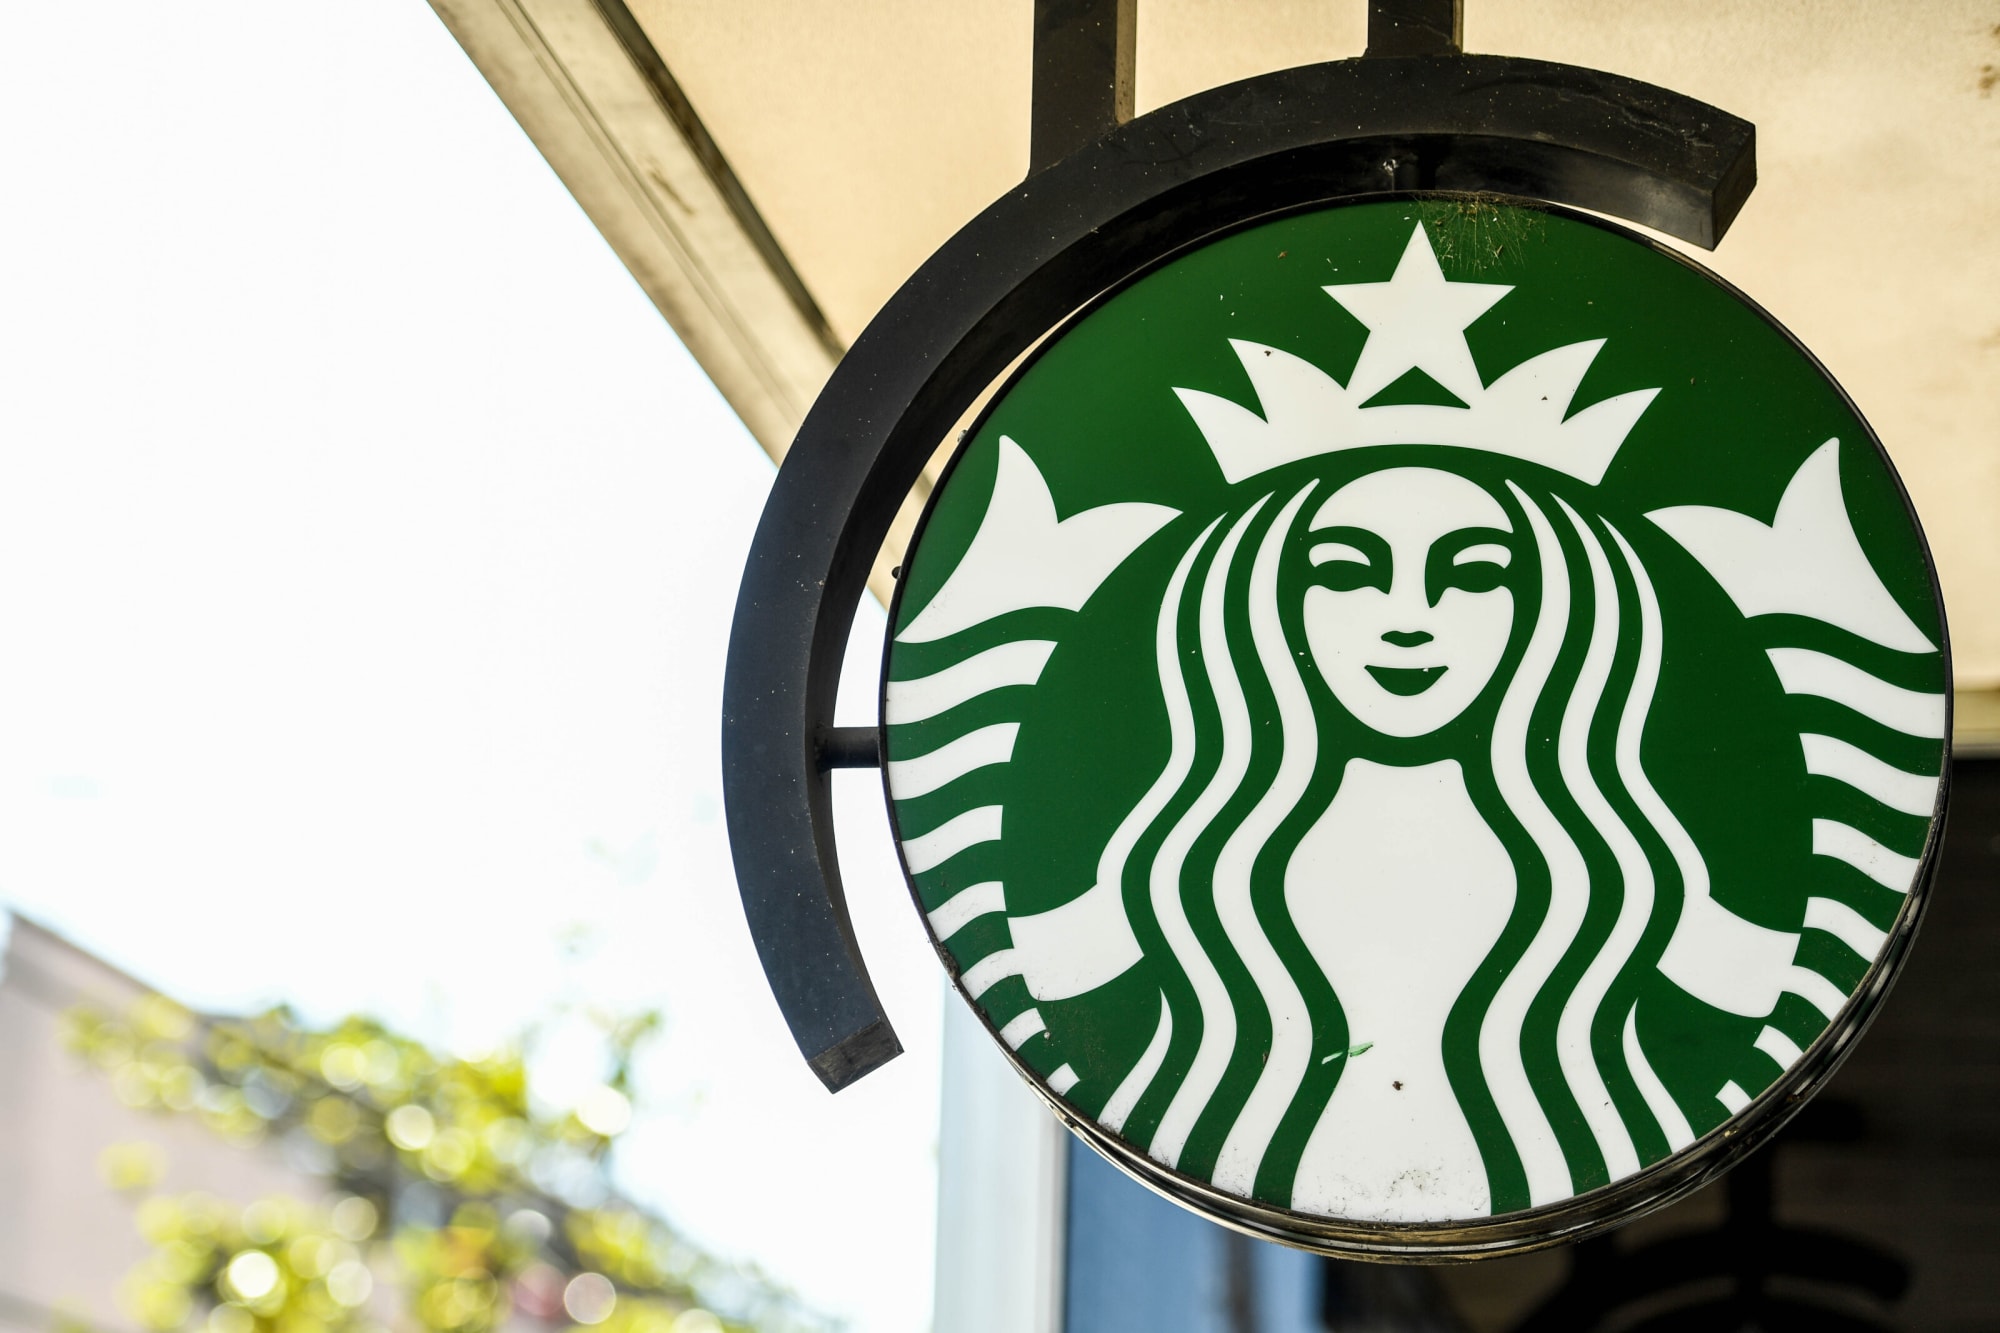 Is Starbucks open on Christmas Eve? [Updated December 2022]